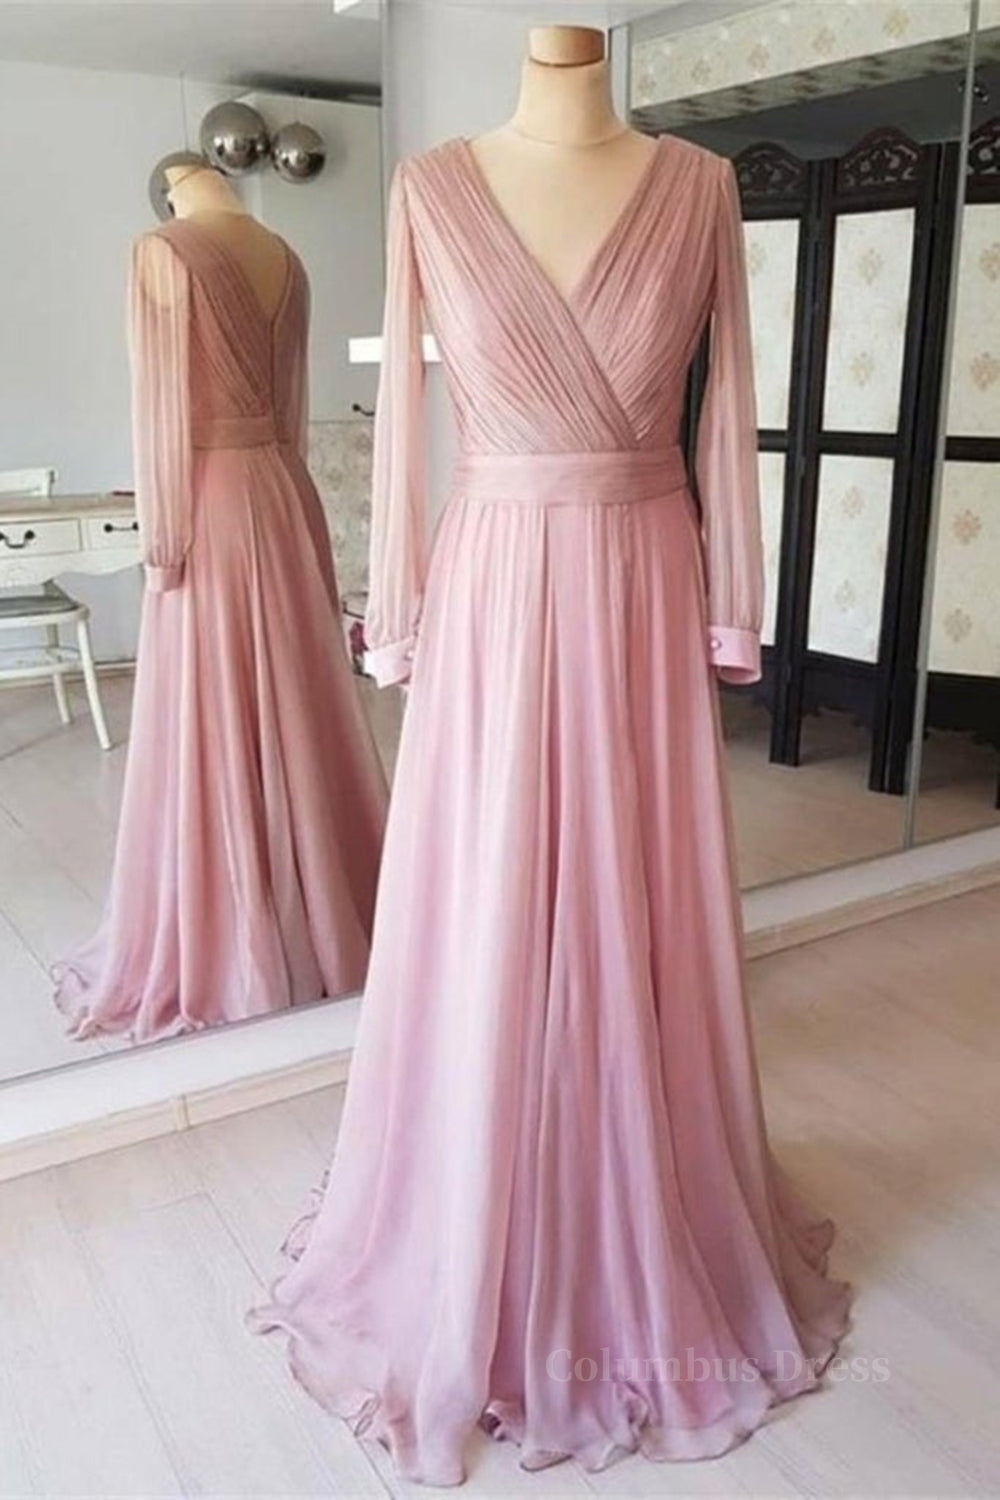 Long Sleeves V Neck Pink Chiffon Long Corset Prom Dress, Long Sleeves Pink Corset Bridesmaid Dress, Pink Corset Formal Evening Dress outfit, Bridesmaid Dress Satin